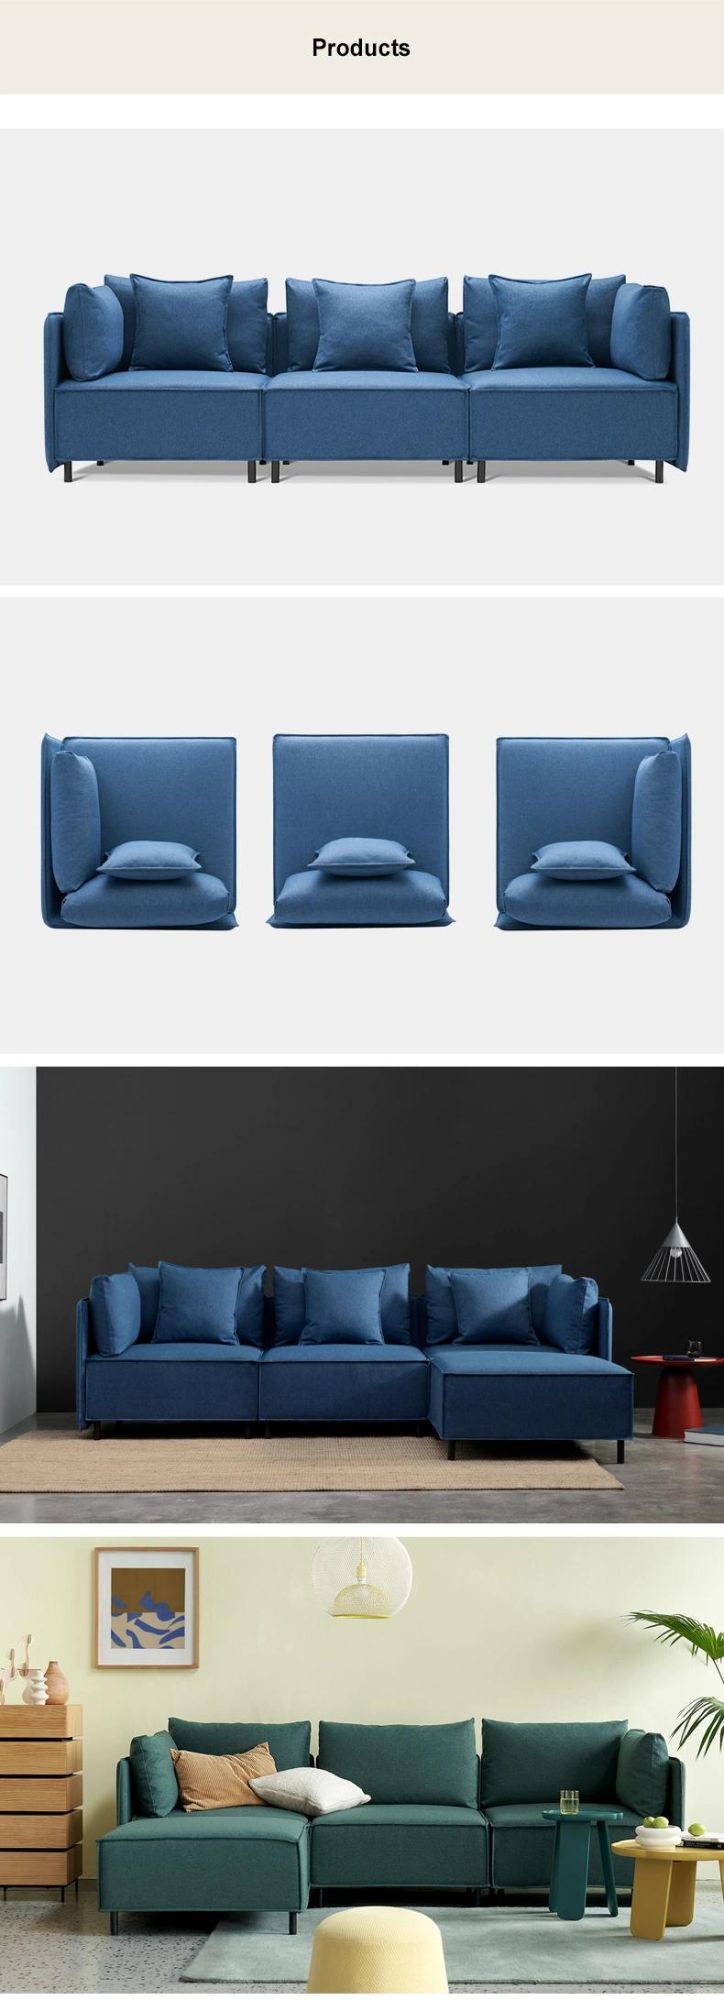 Fabric Non Inflatable Dubai Home Corner Recliner Sofa Modern Furniture Hot Sale